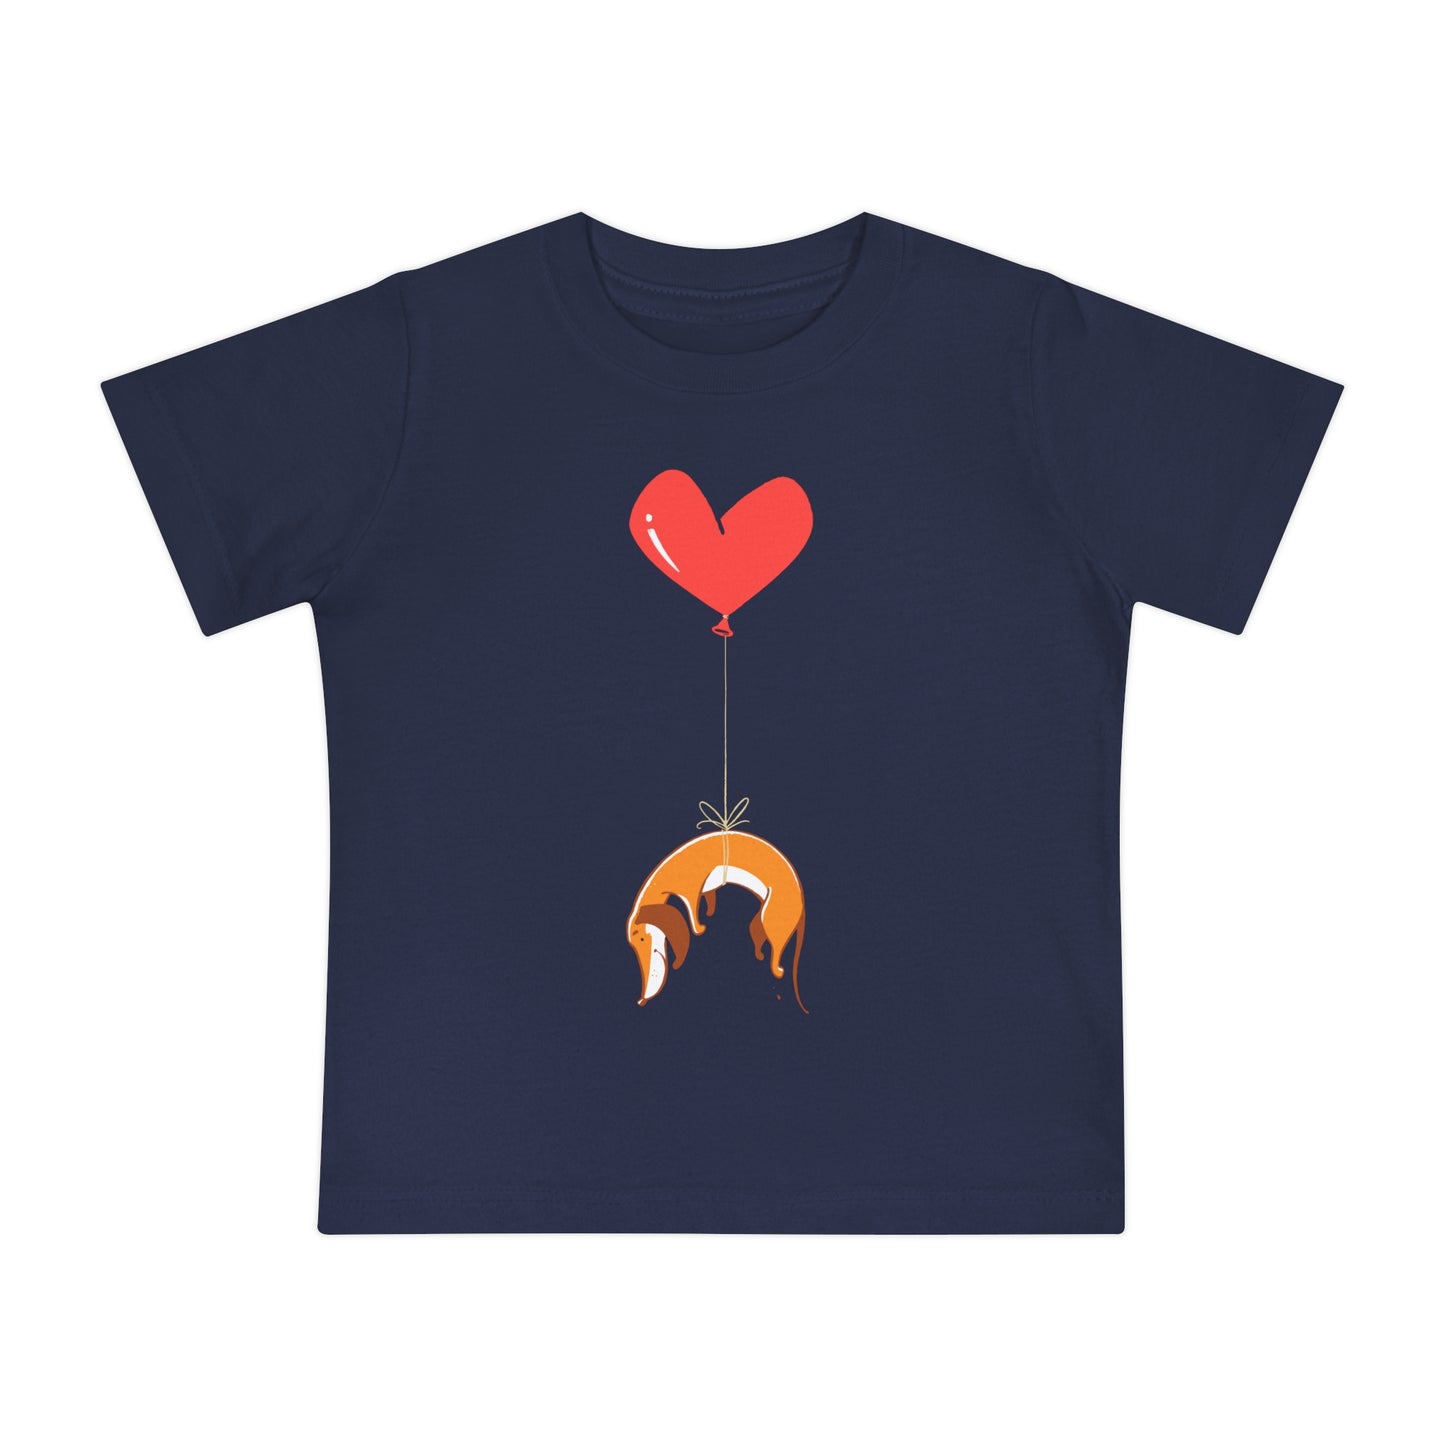 Wiener Dog on Heart Strings Baby Graphic Tee